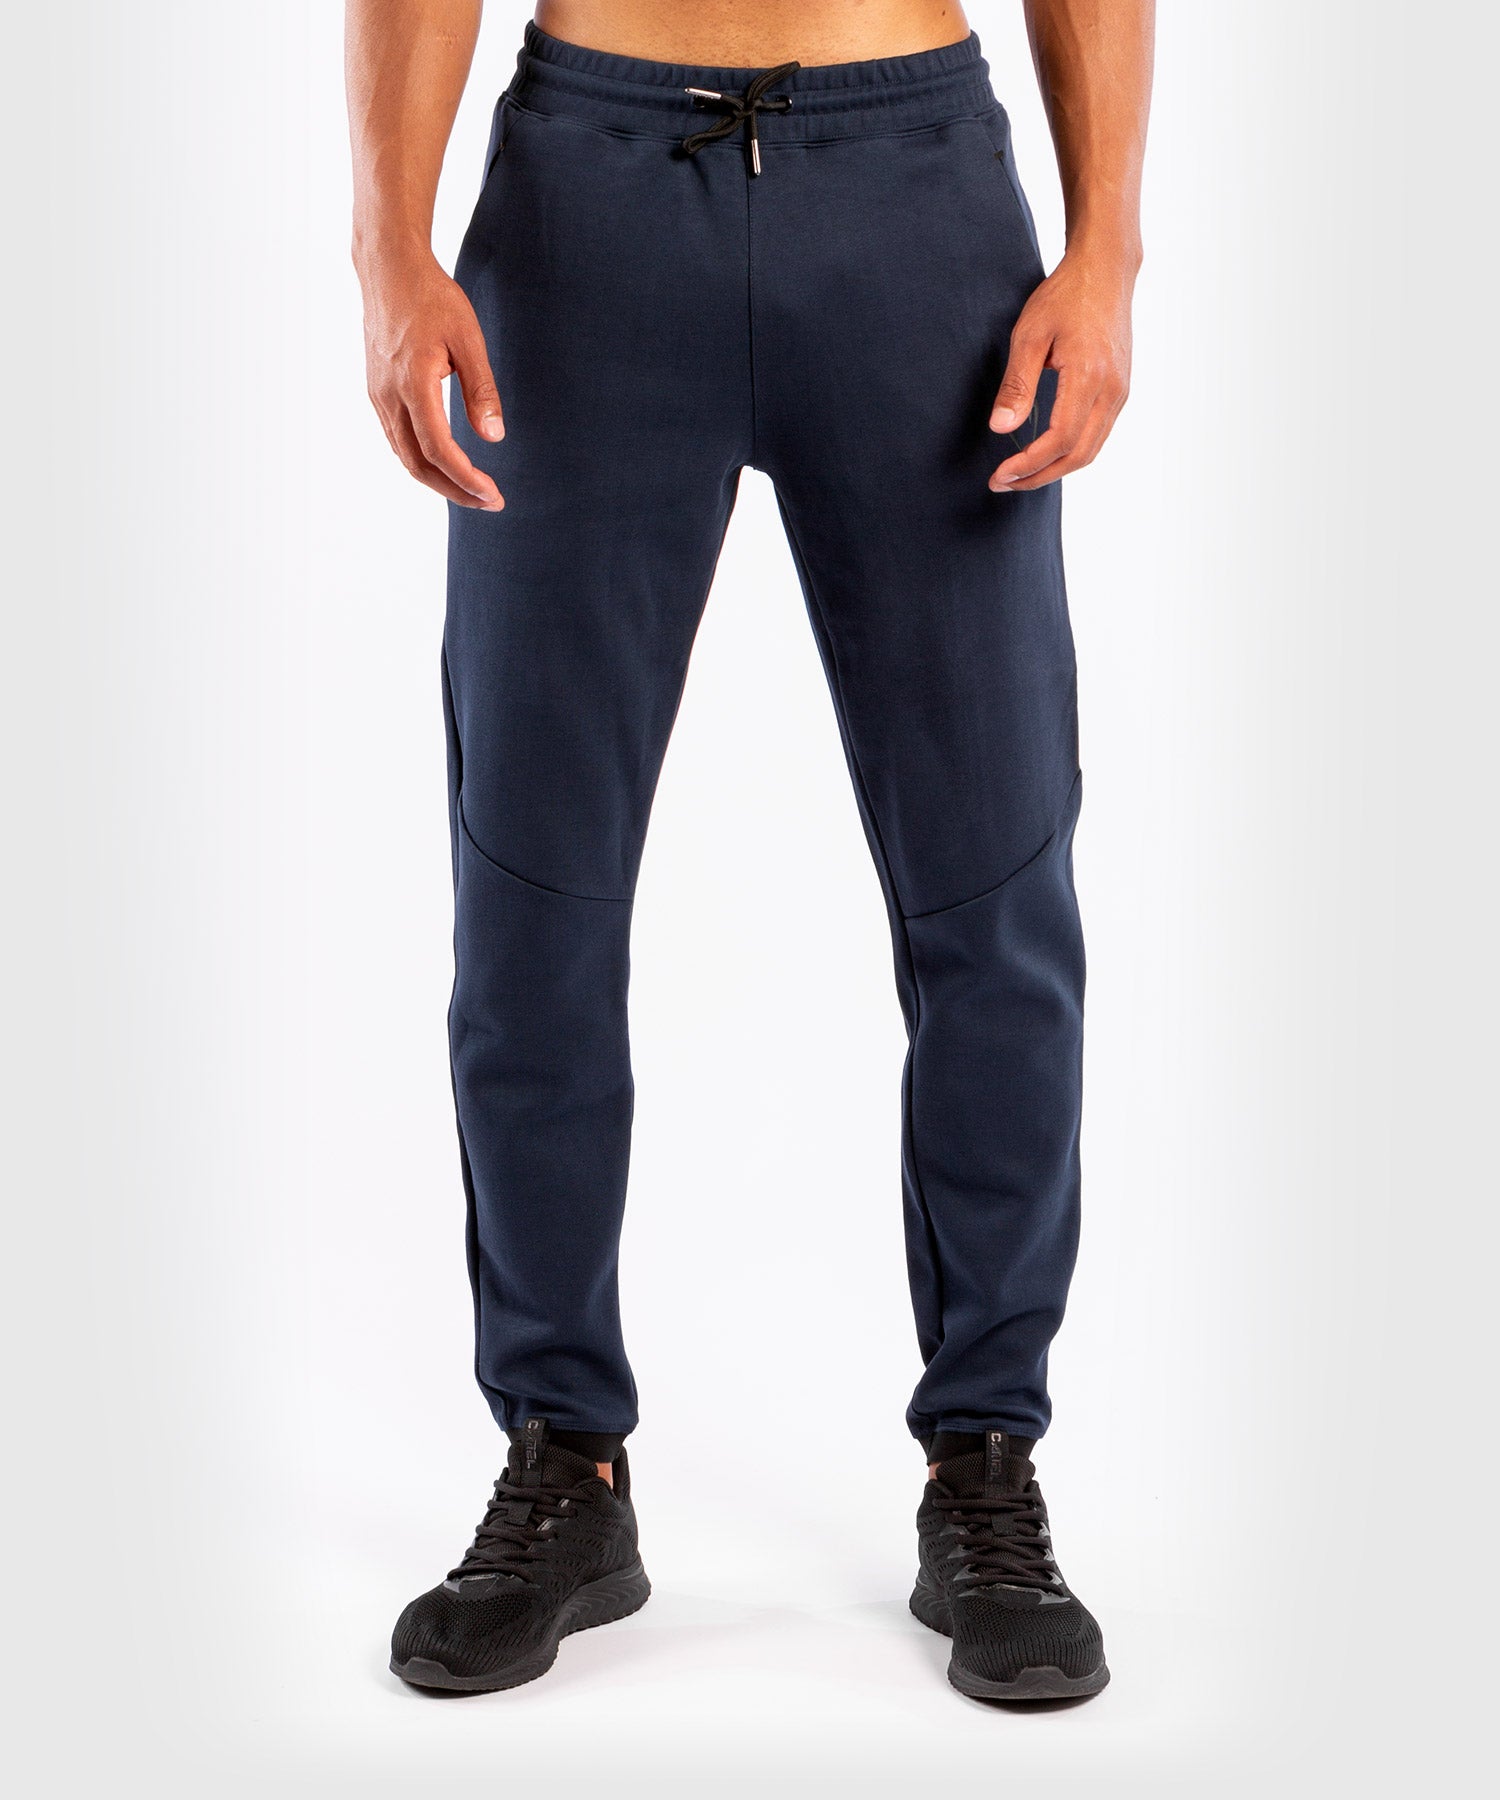 Pantalon de Jogging Venum Laser X Connect – Bleu Marine - Pantalons de jogging